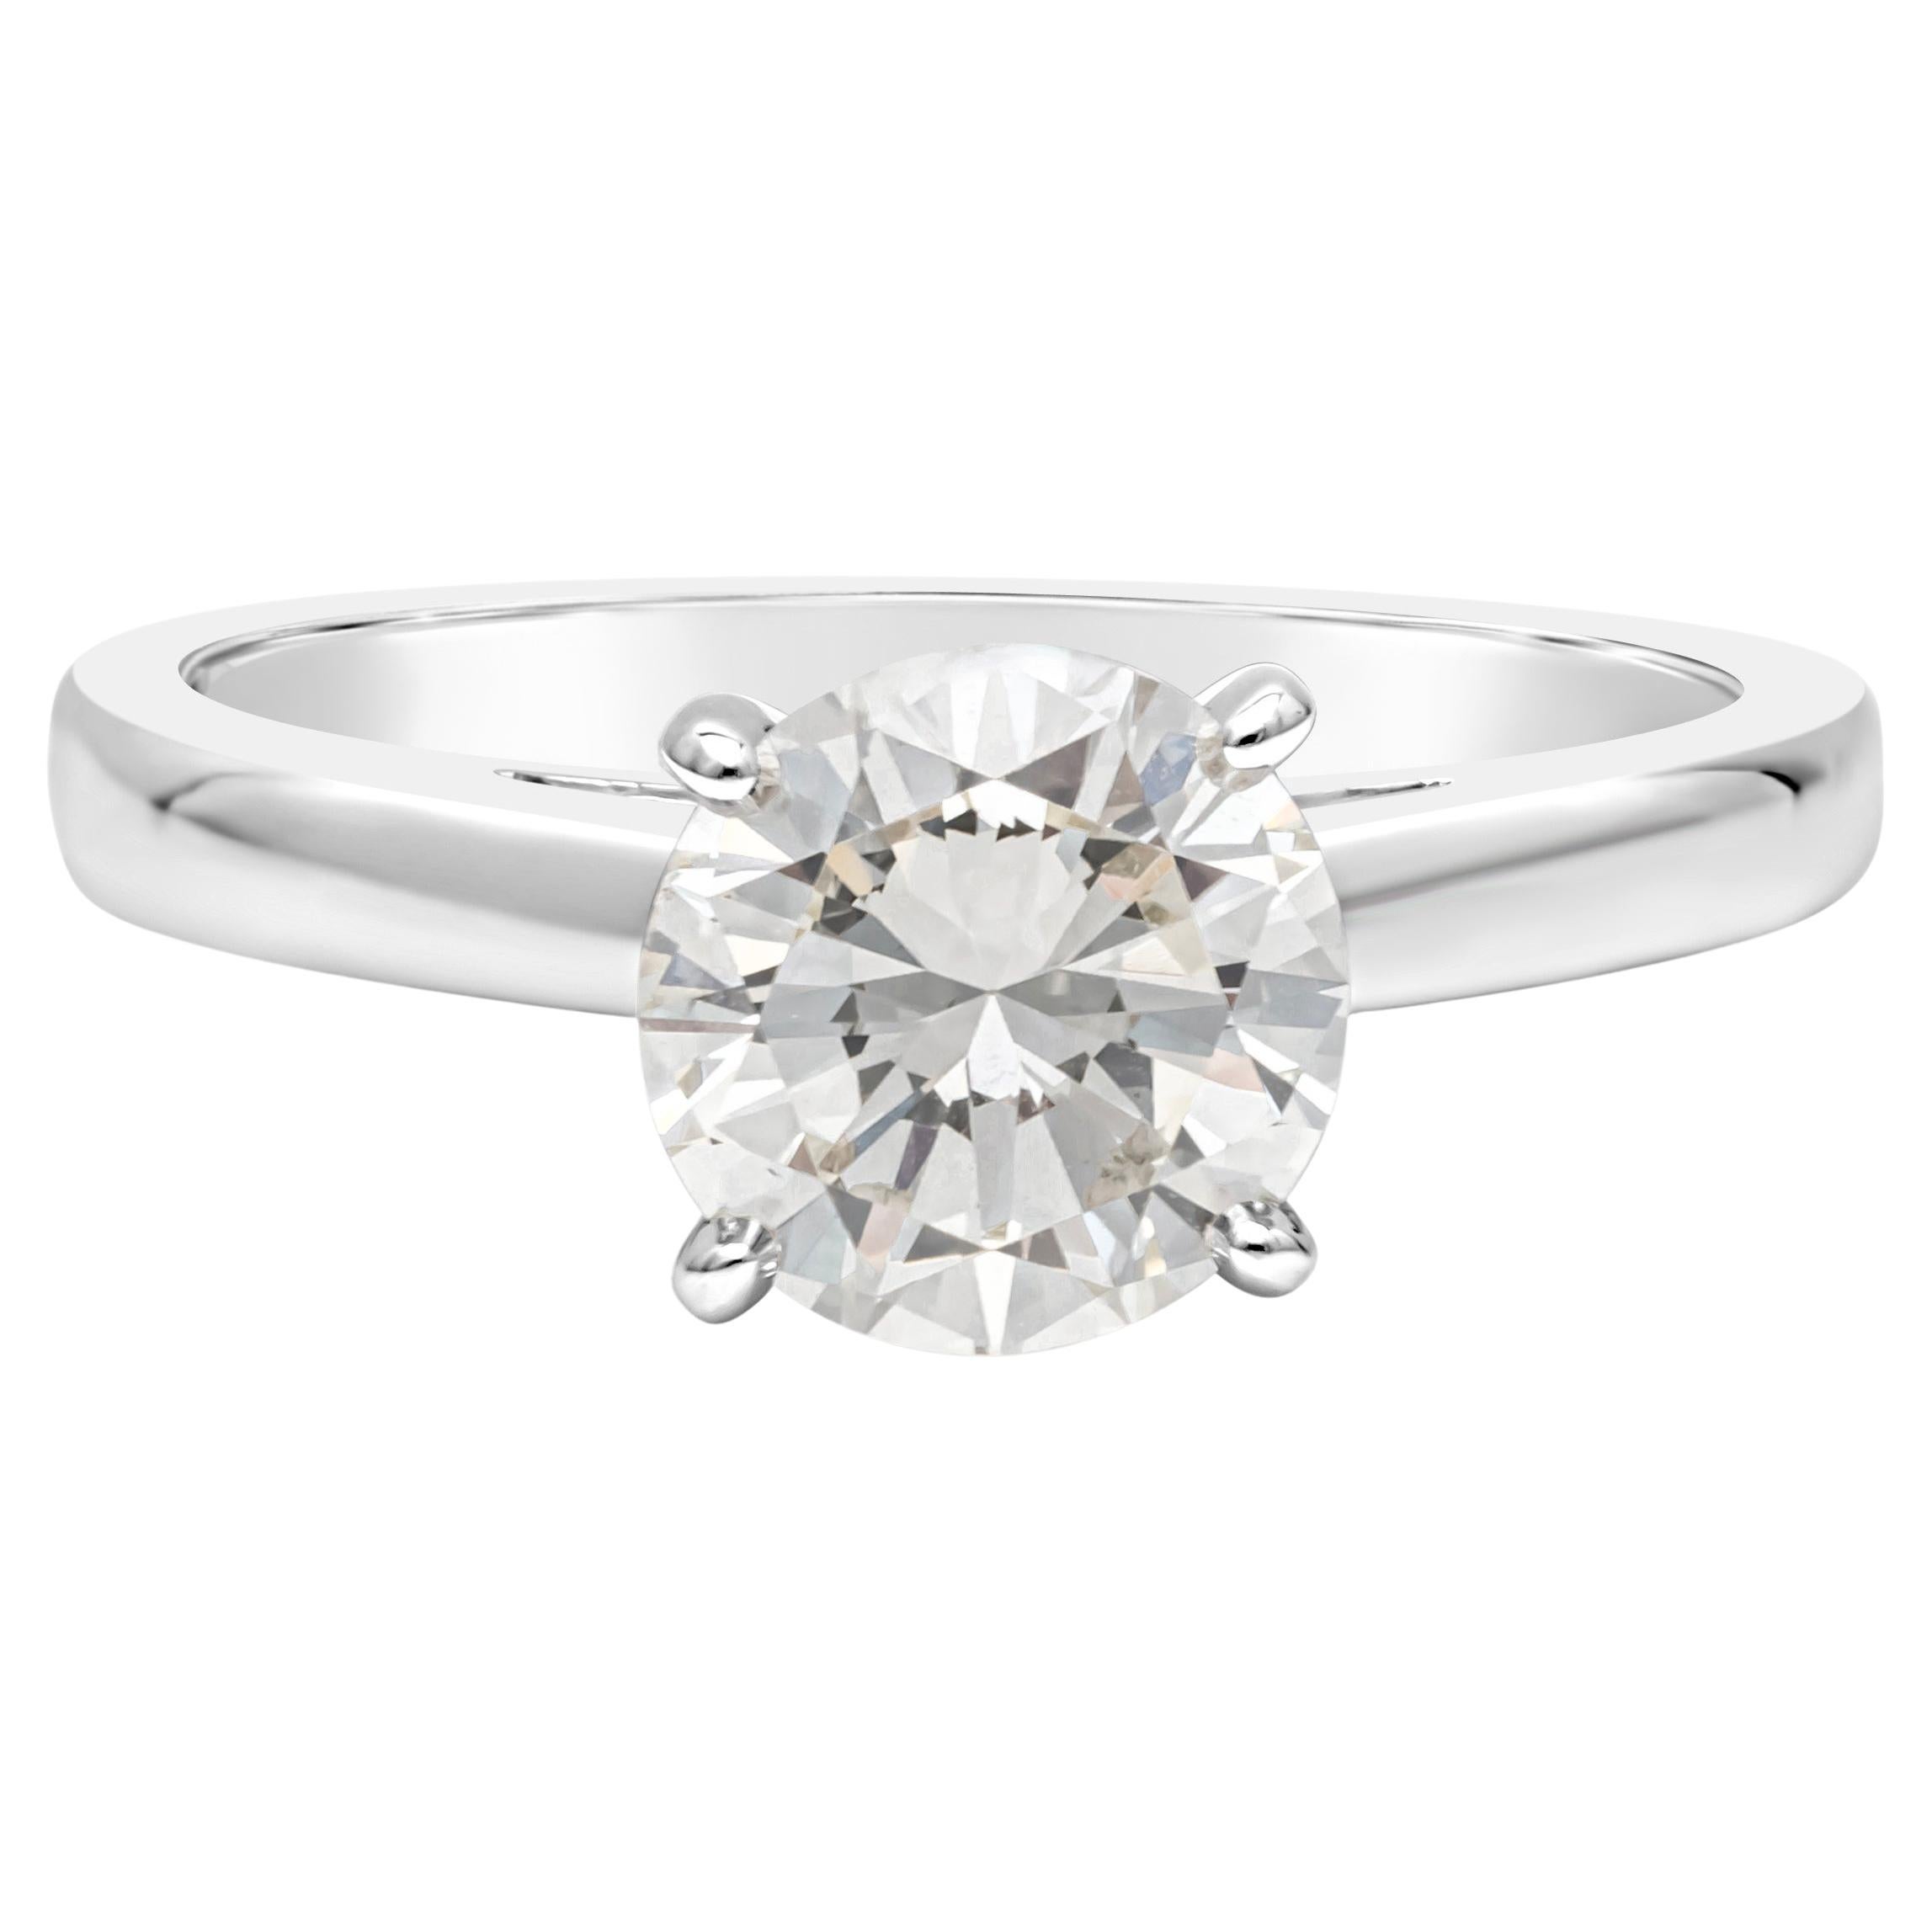 Roman Malakov 1.34 Carats Round Brilliant Cut Diamond Solitaire Engagement Ring For Sale